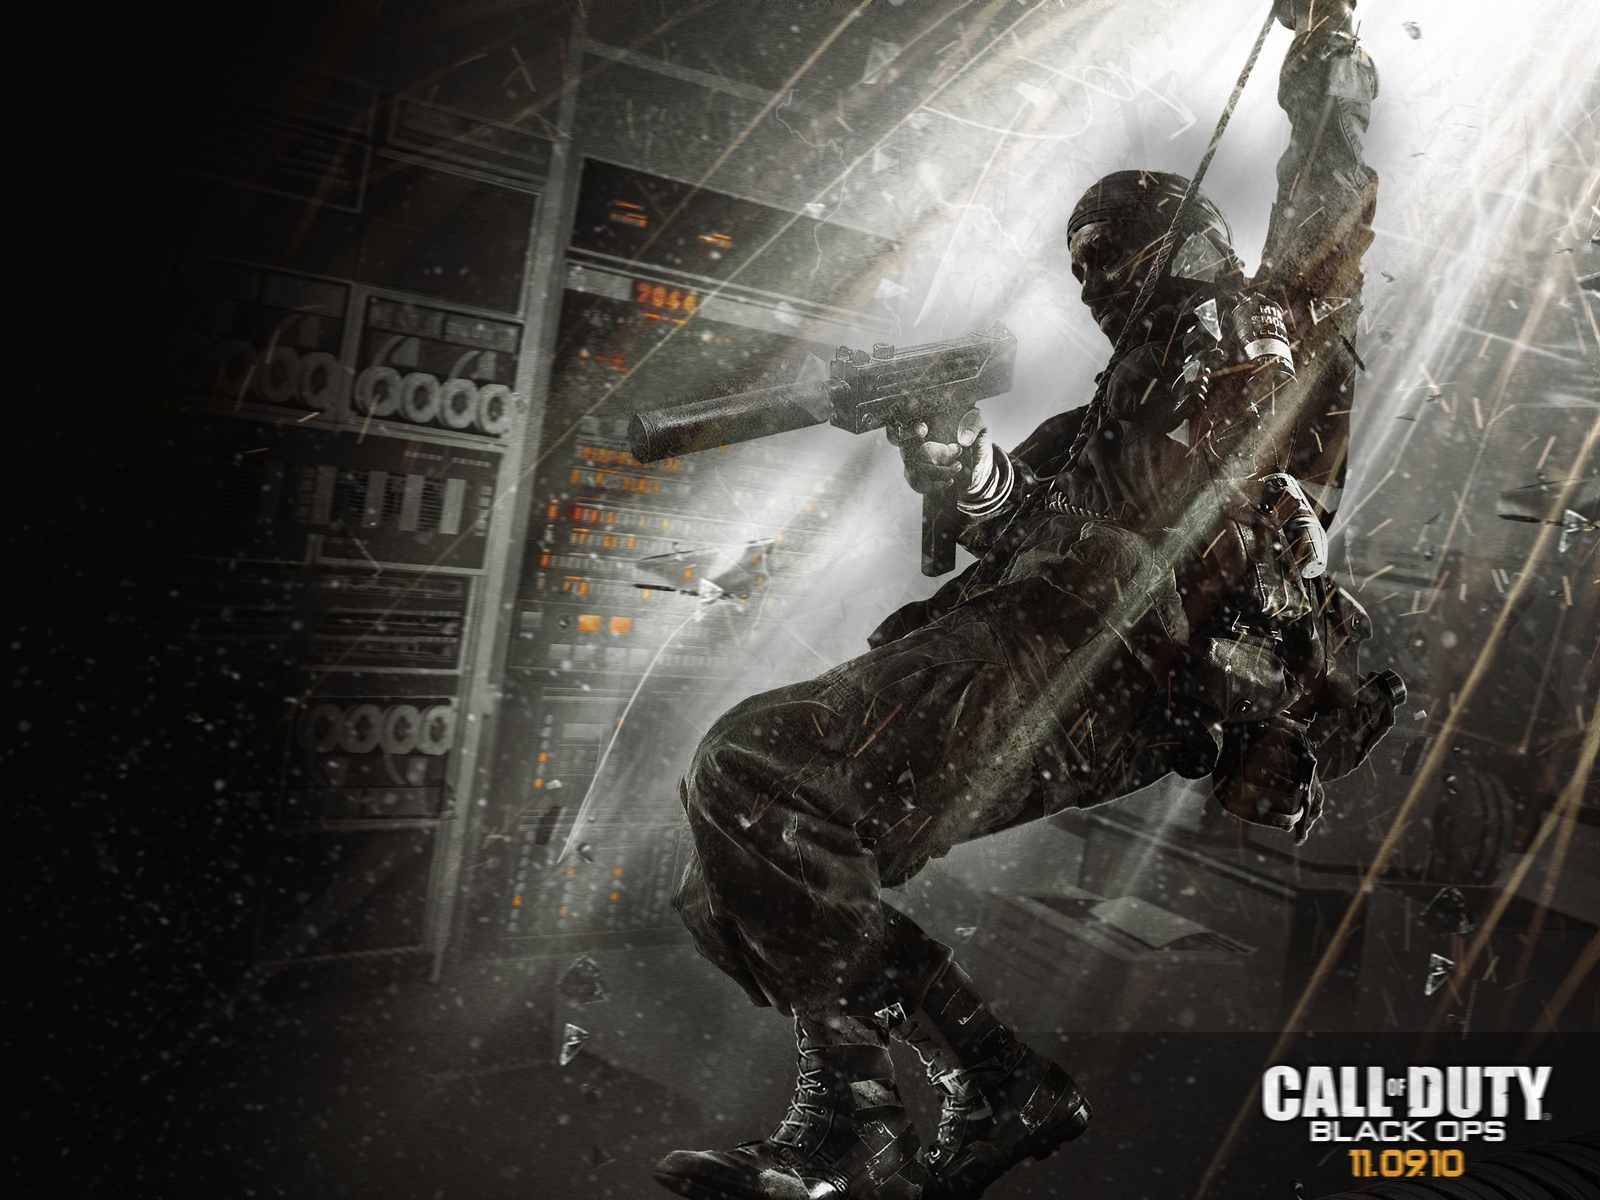 Call of Duty   Black OPS HD Wallpaper 1080p   HD Dock